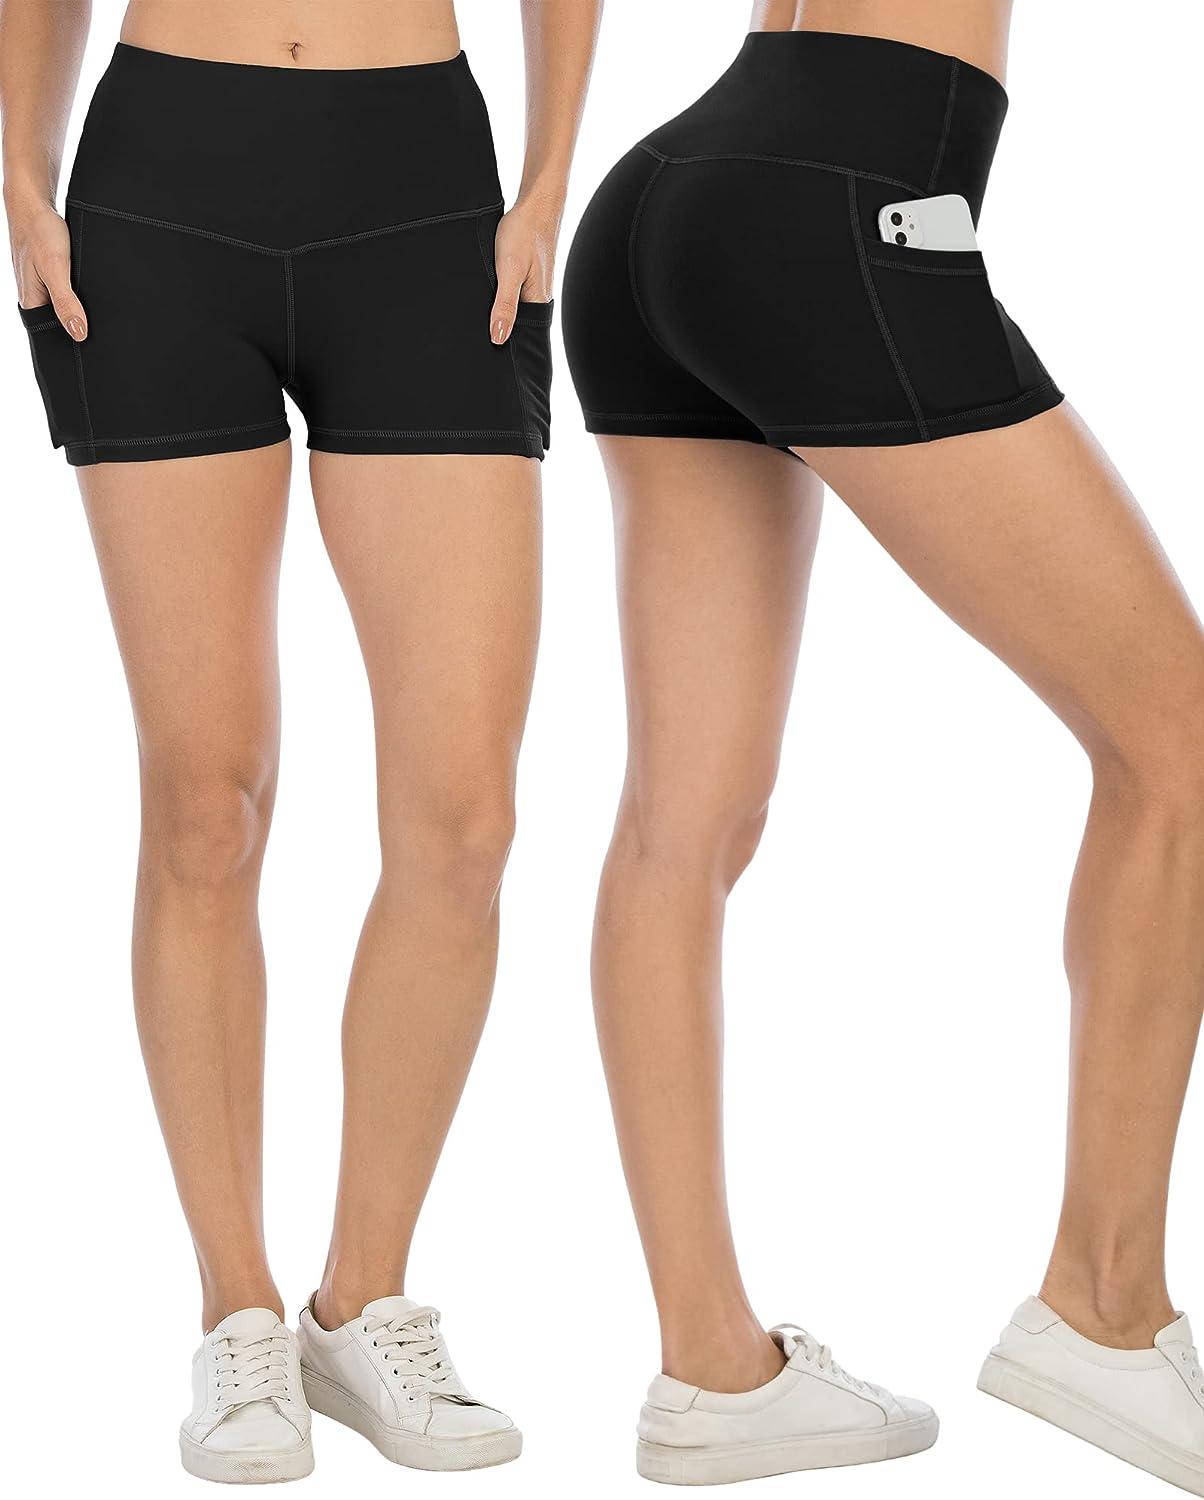 Spandex Shorts Cameltoe -  Australia